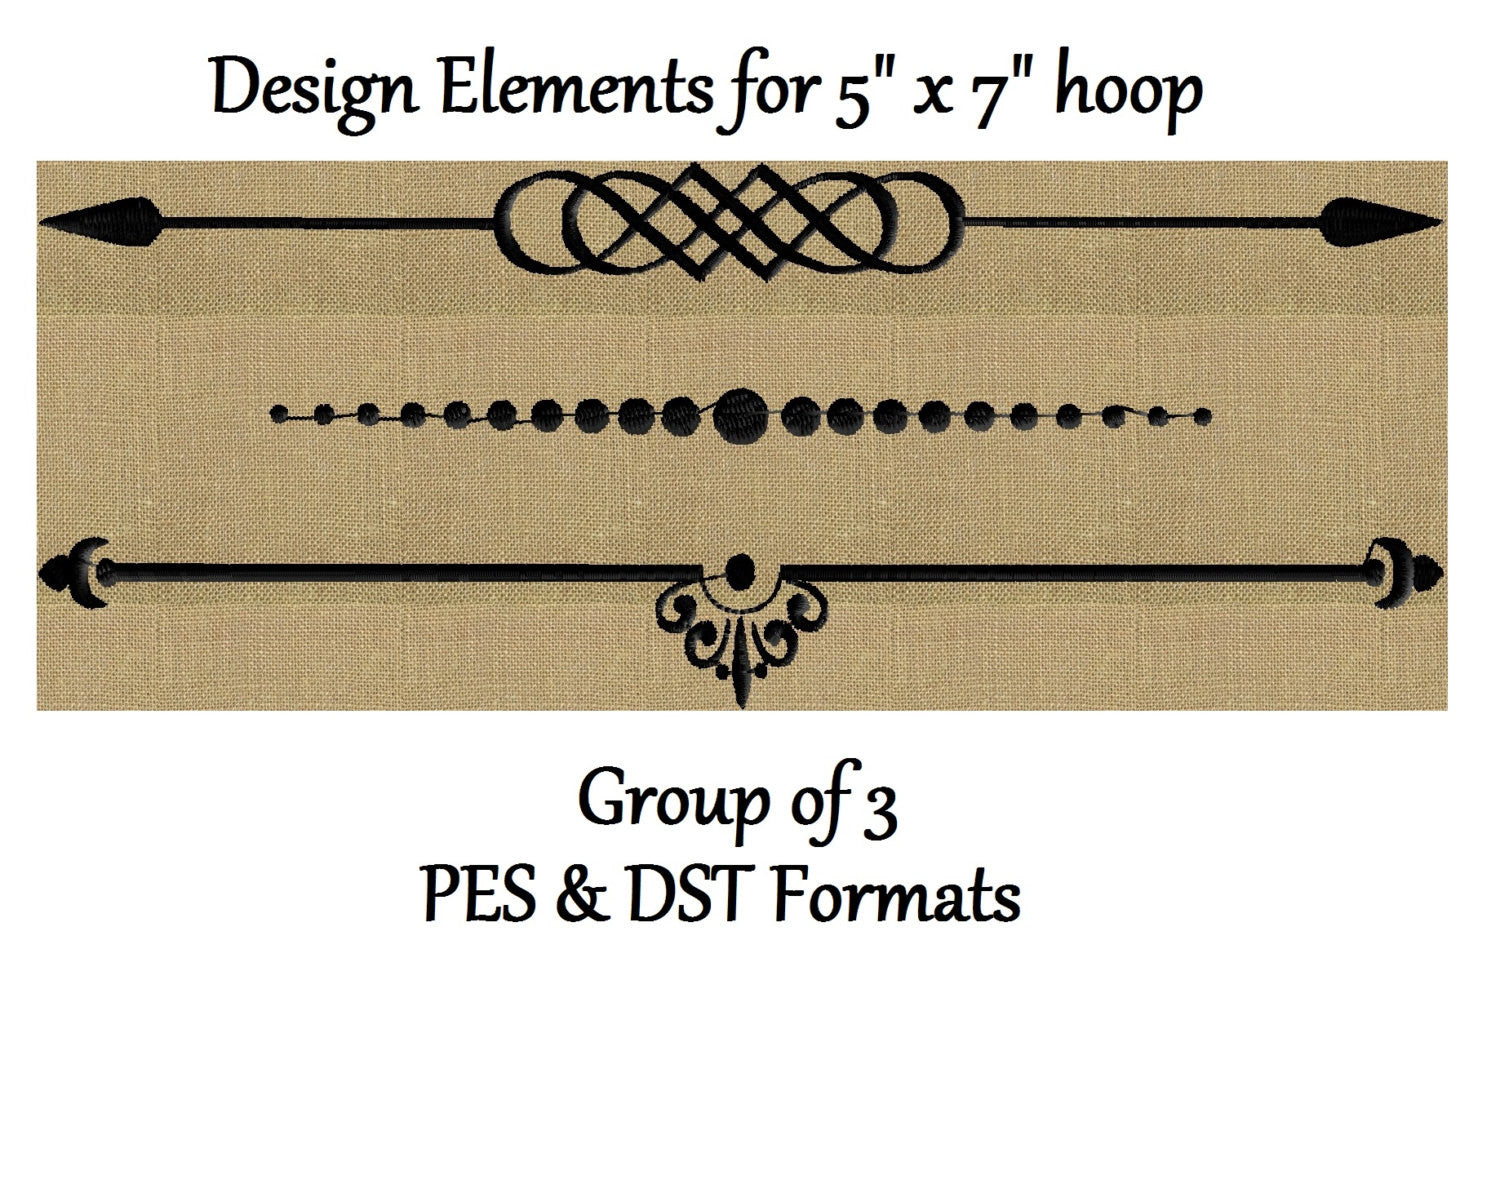 Design Elements frames - Scrolls Squiggles Dots Lines - Set of 3 - EMBROIDERY DESIGN FILE - Instant download - Dst Pes formats